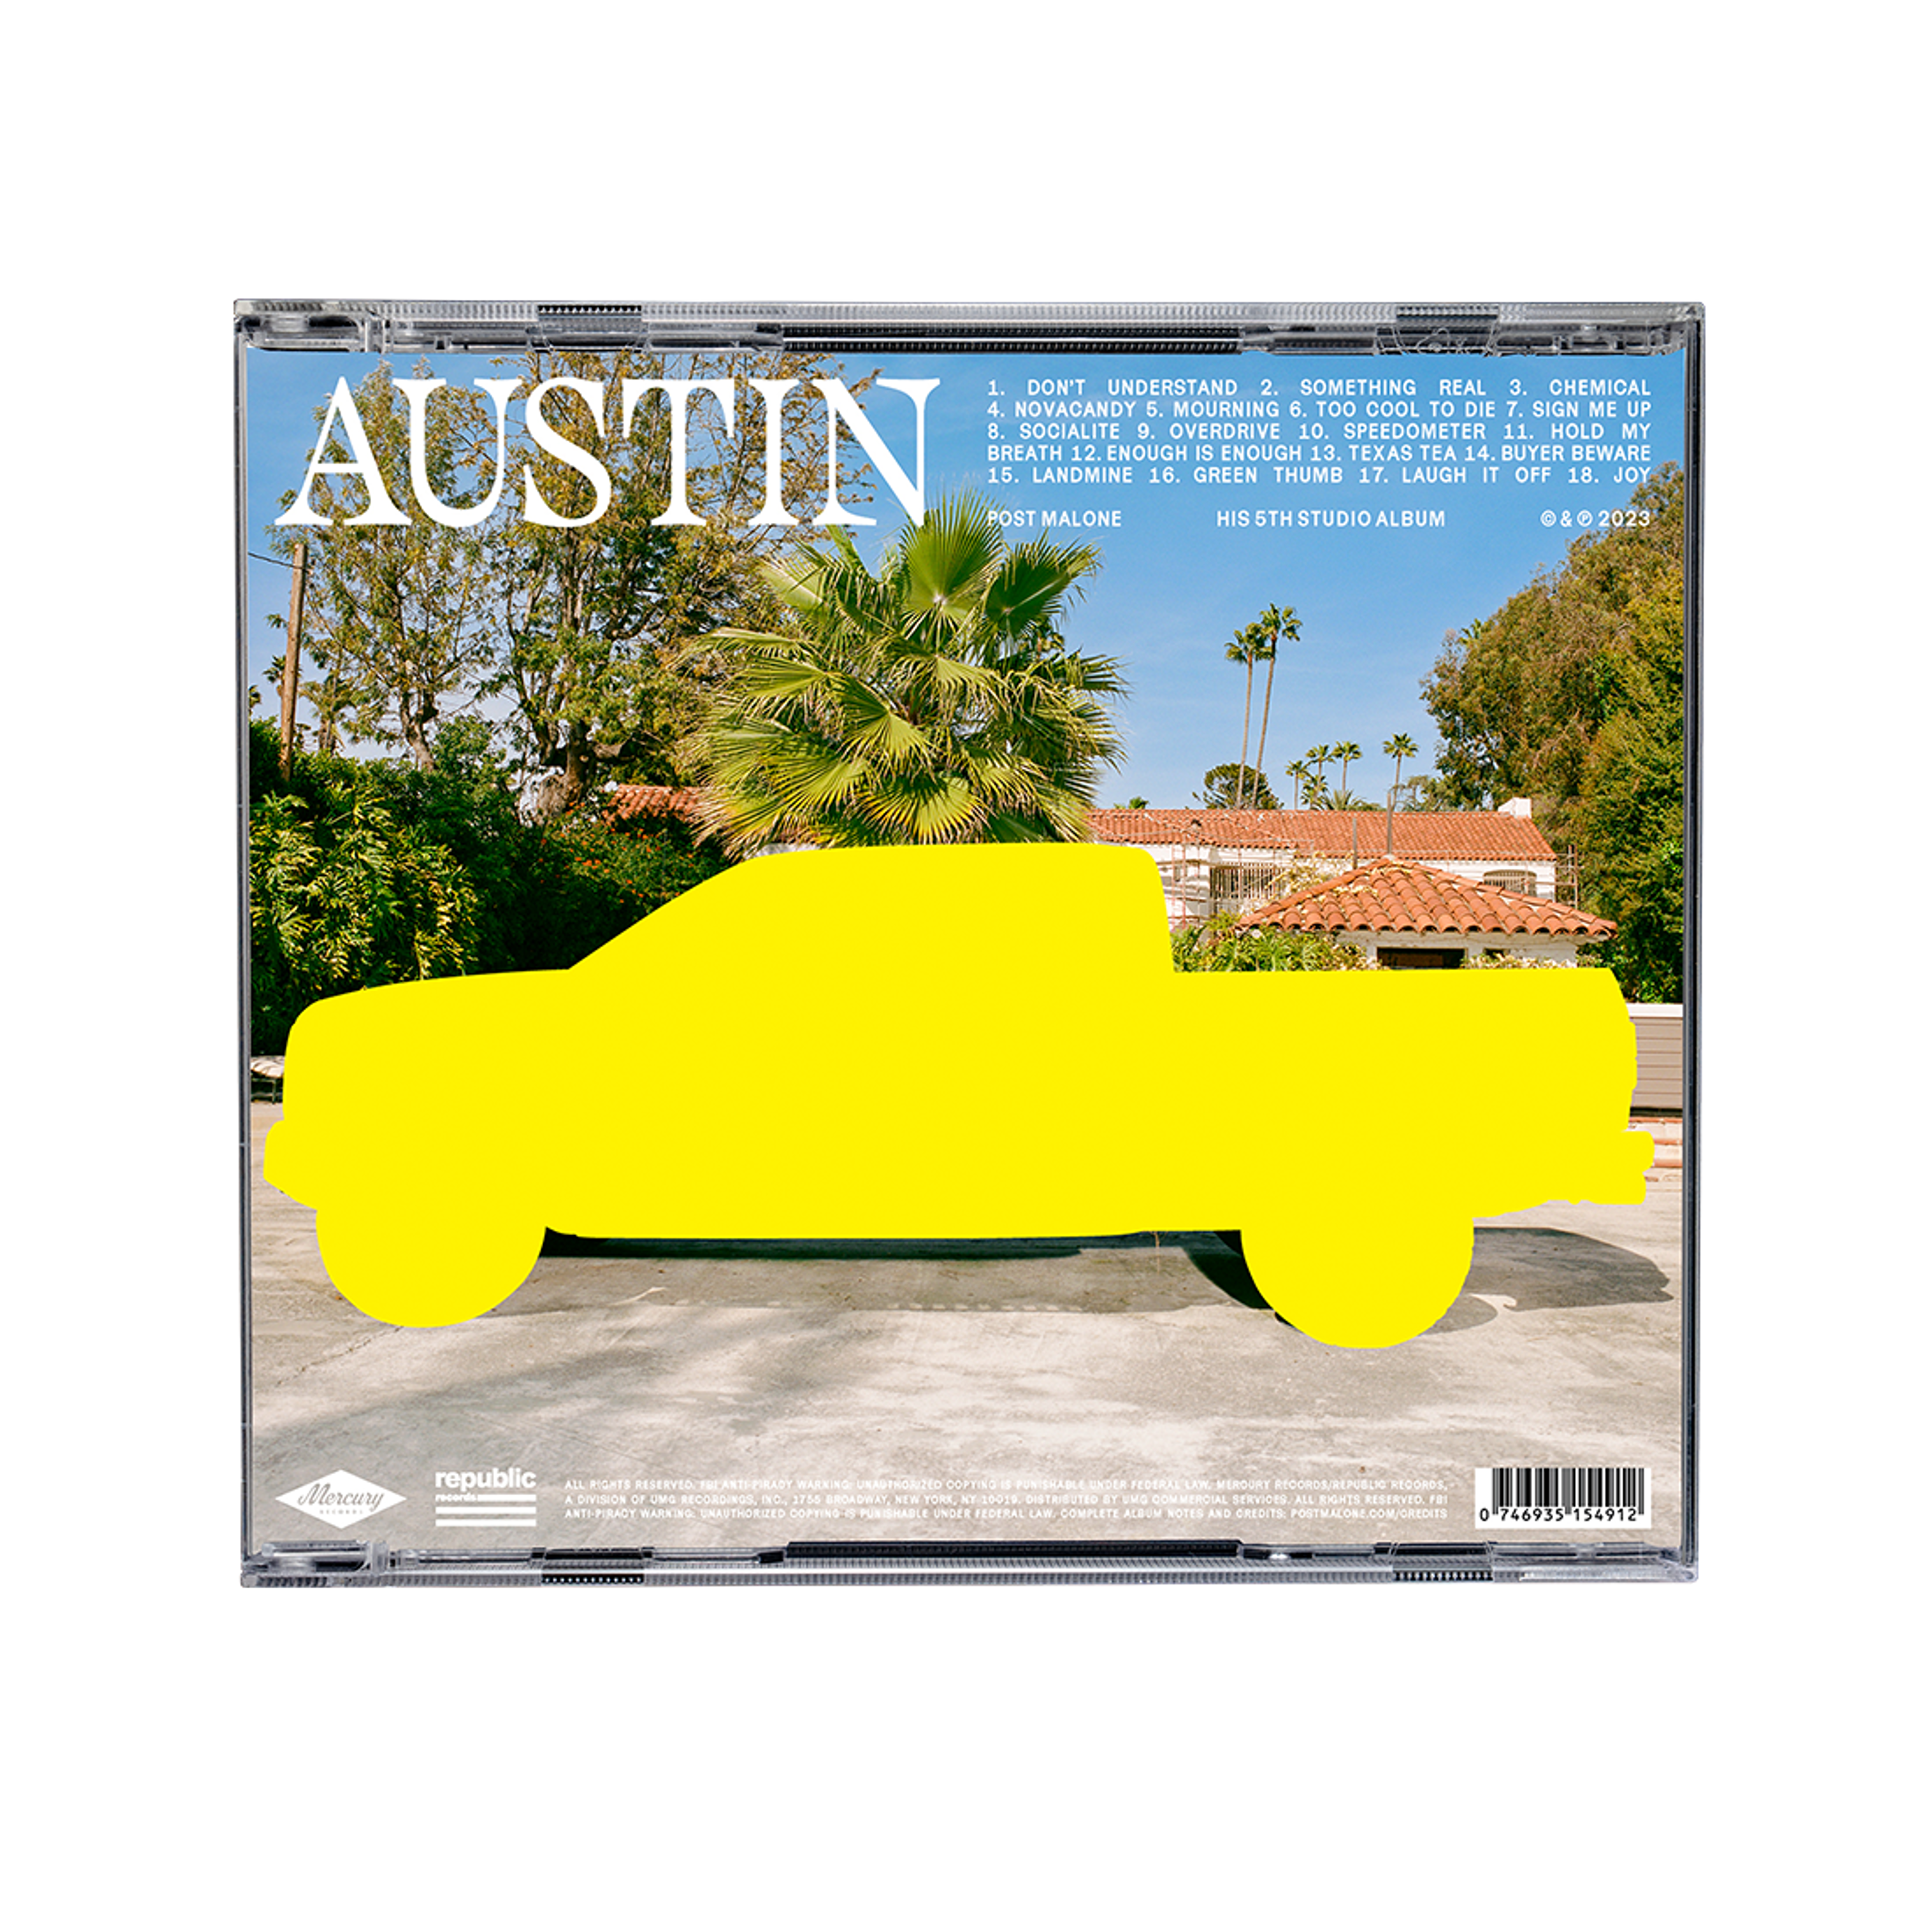 Alternate View 1 of Austin (Alt. Tour Version 4)